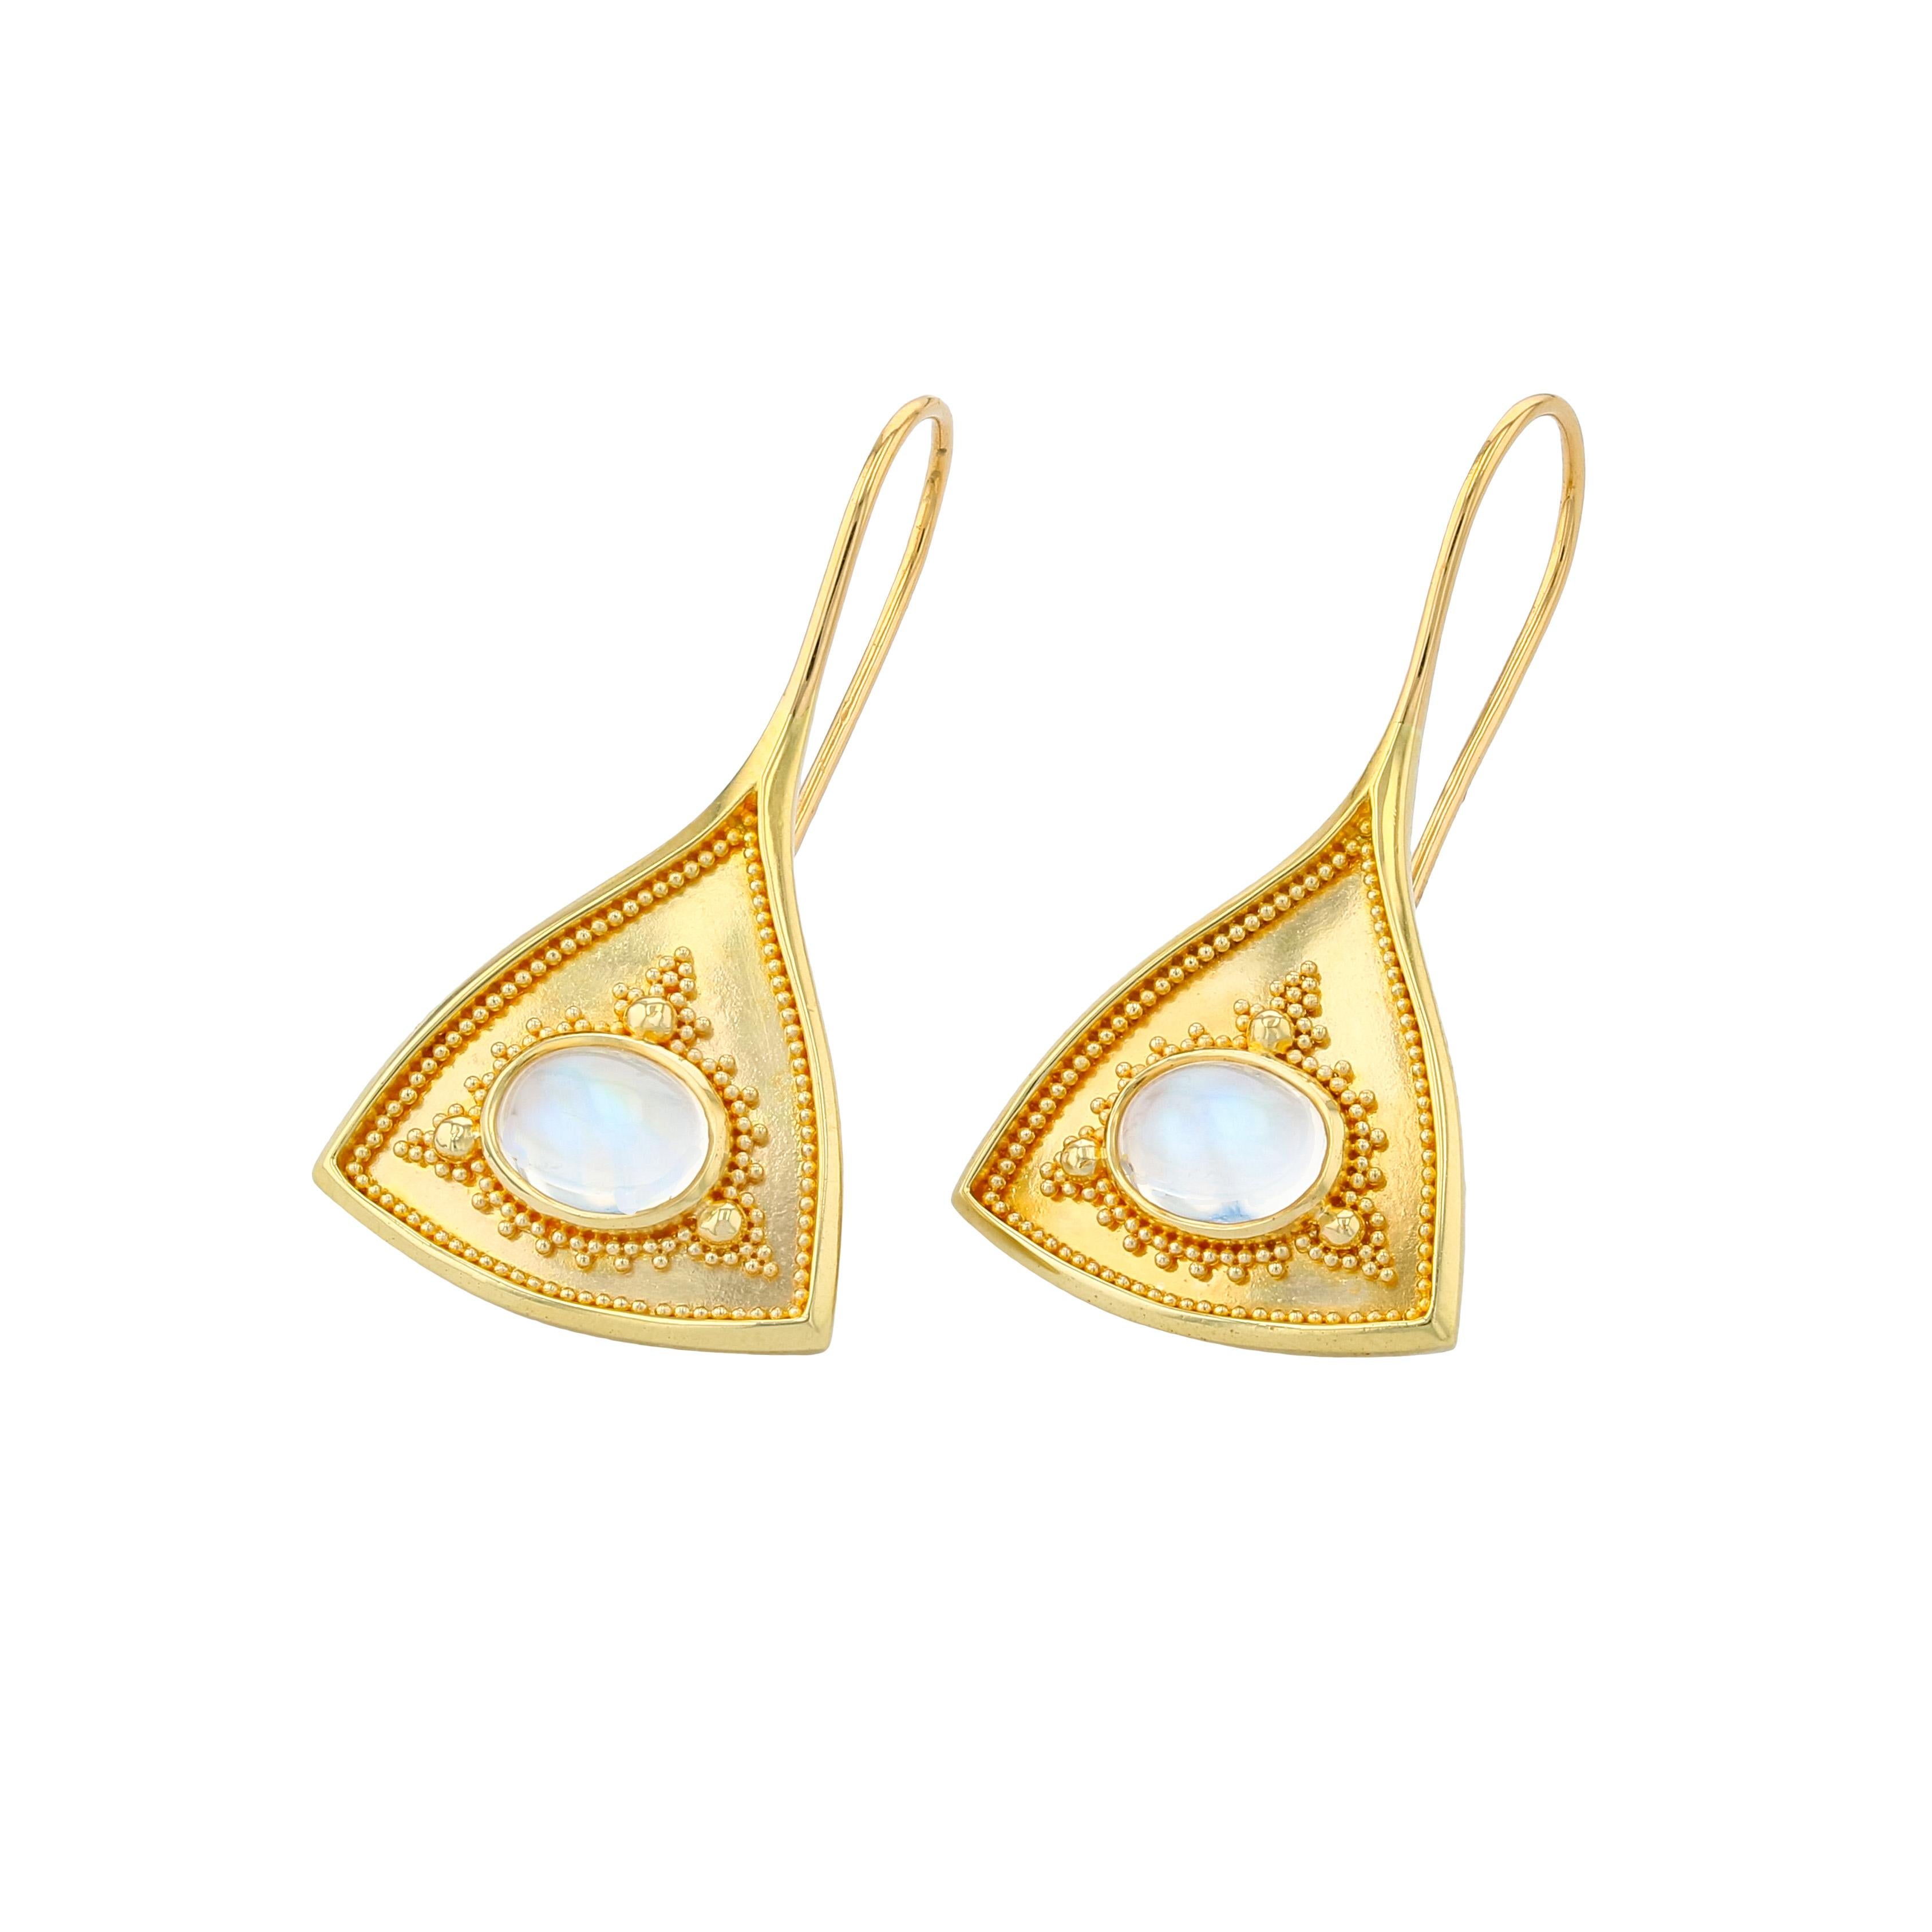 Oval Cut Kent Raible 18 Karat Gold Moonstone Drop Earrings with Gold Granulation